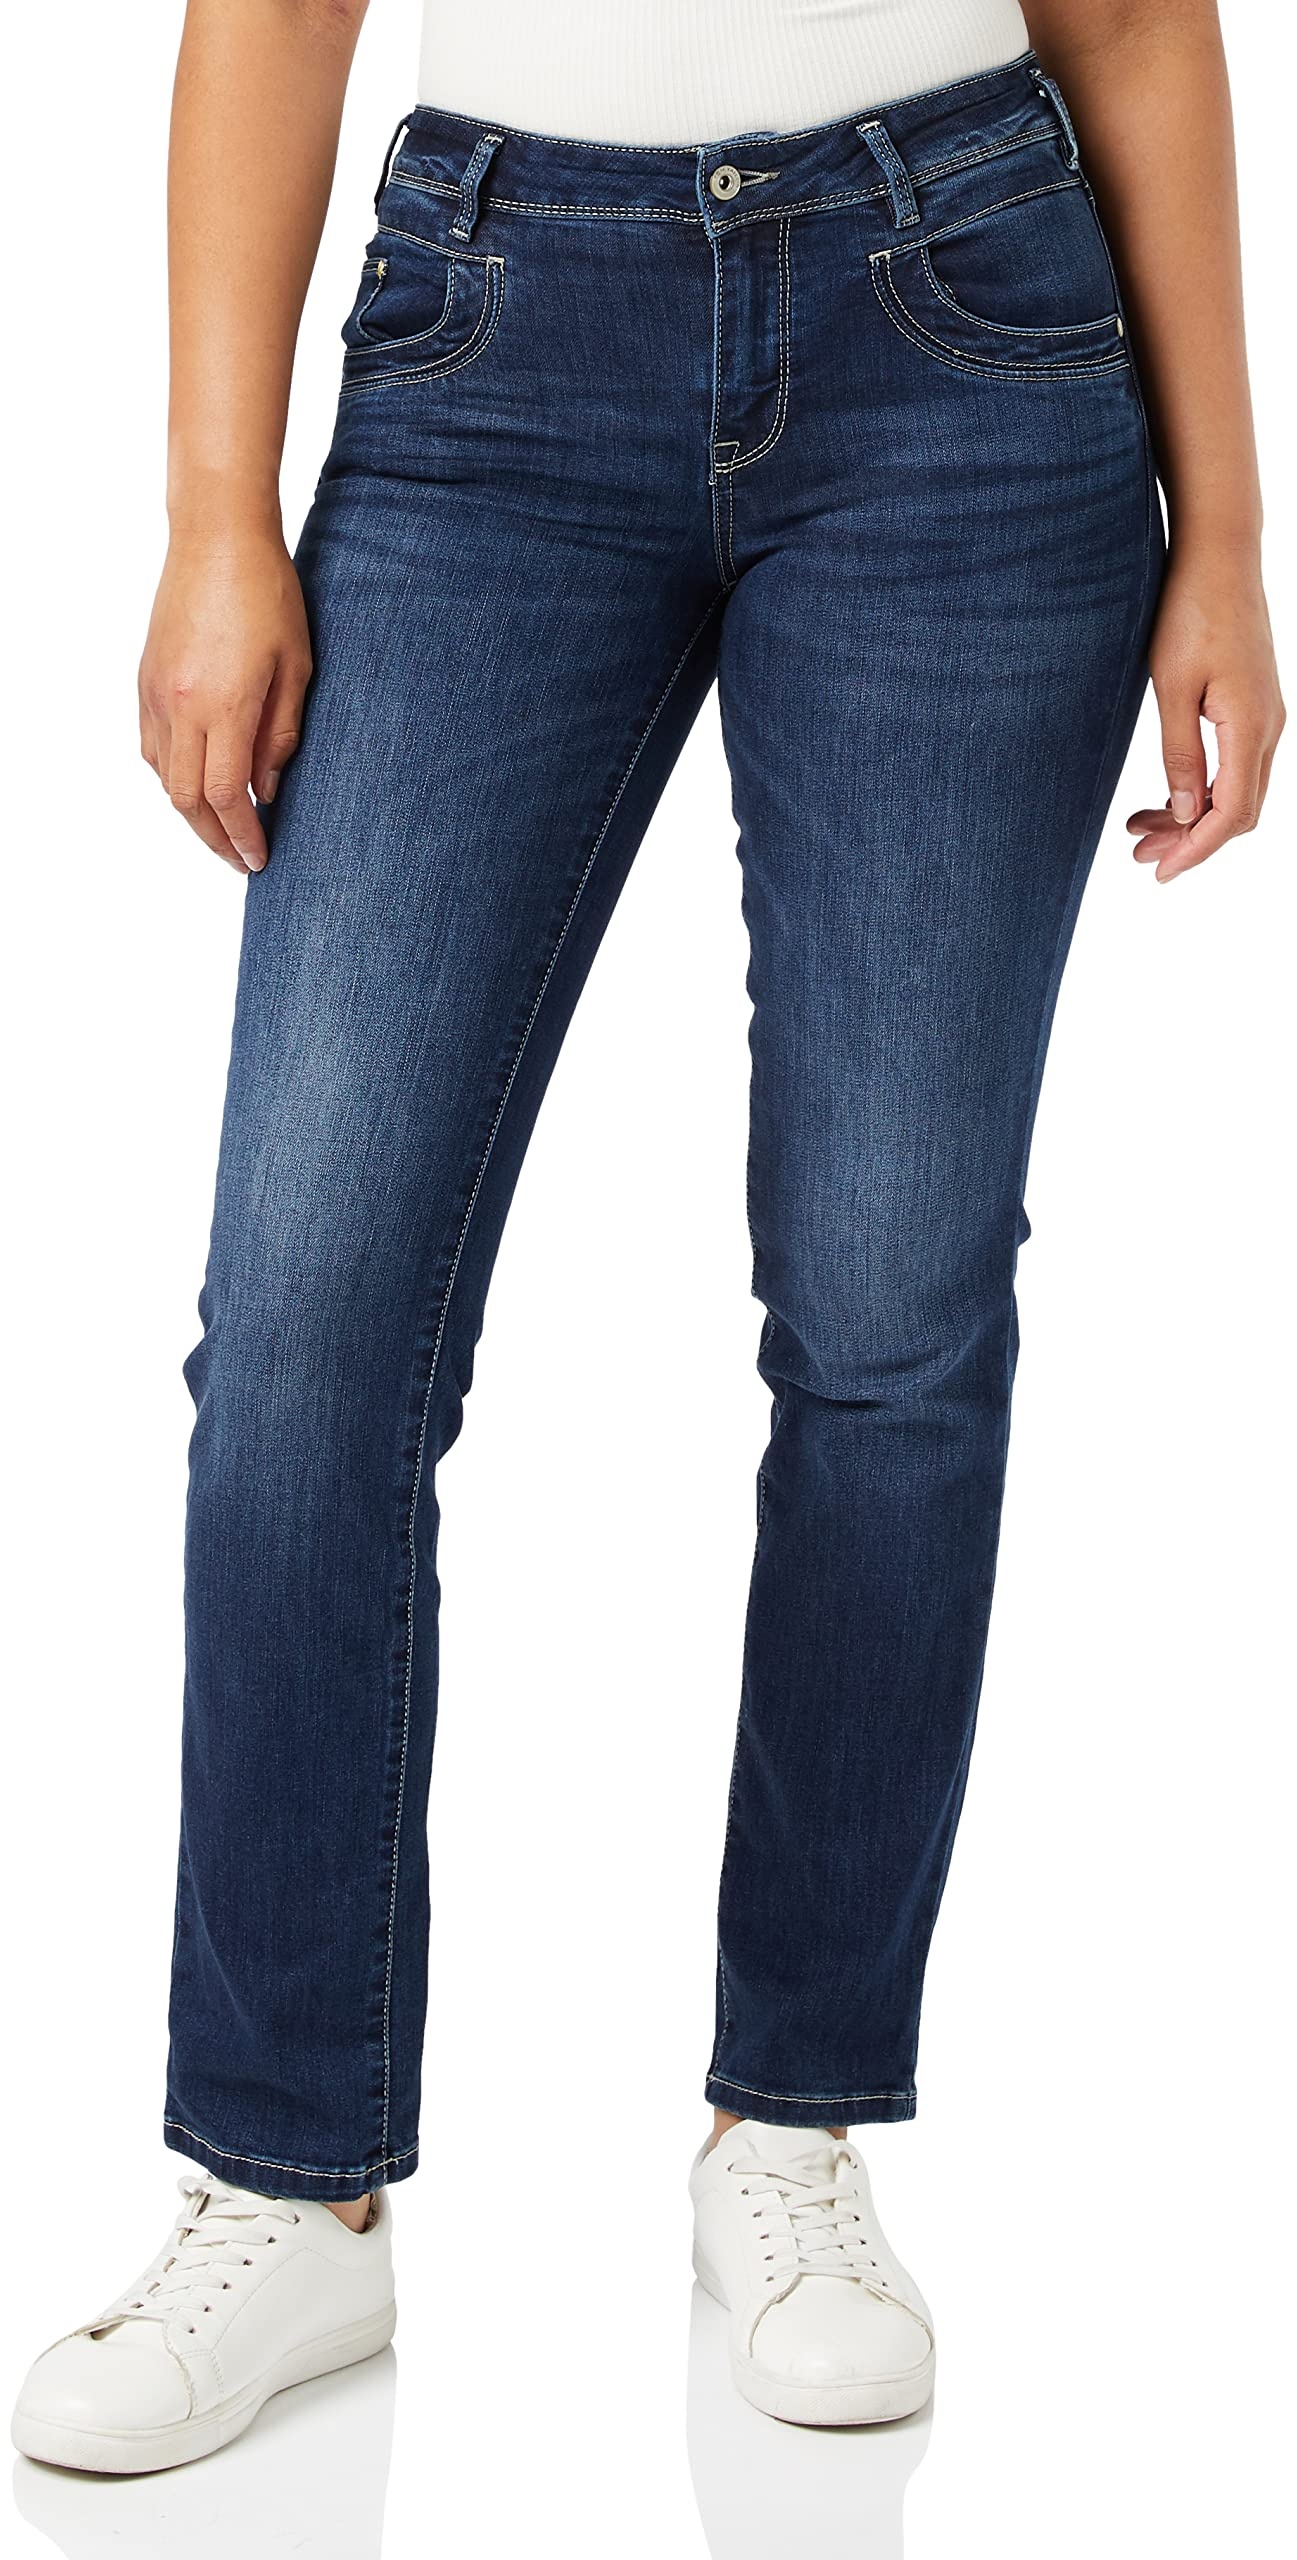 TOM TAILOR Damen 1008146 Alexa Straight Jeans, 10282 - Dark Stone Wash Denim, 33W / 30L EU